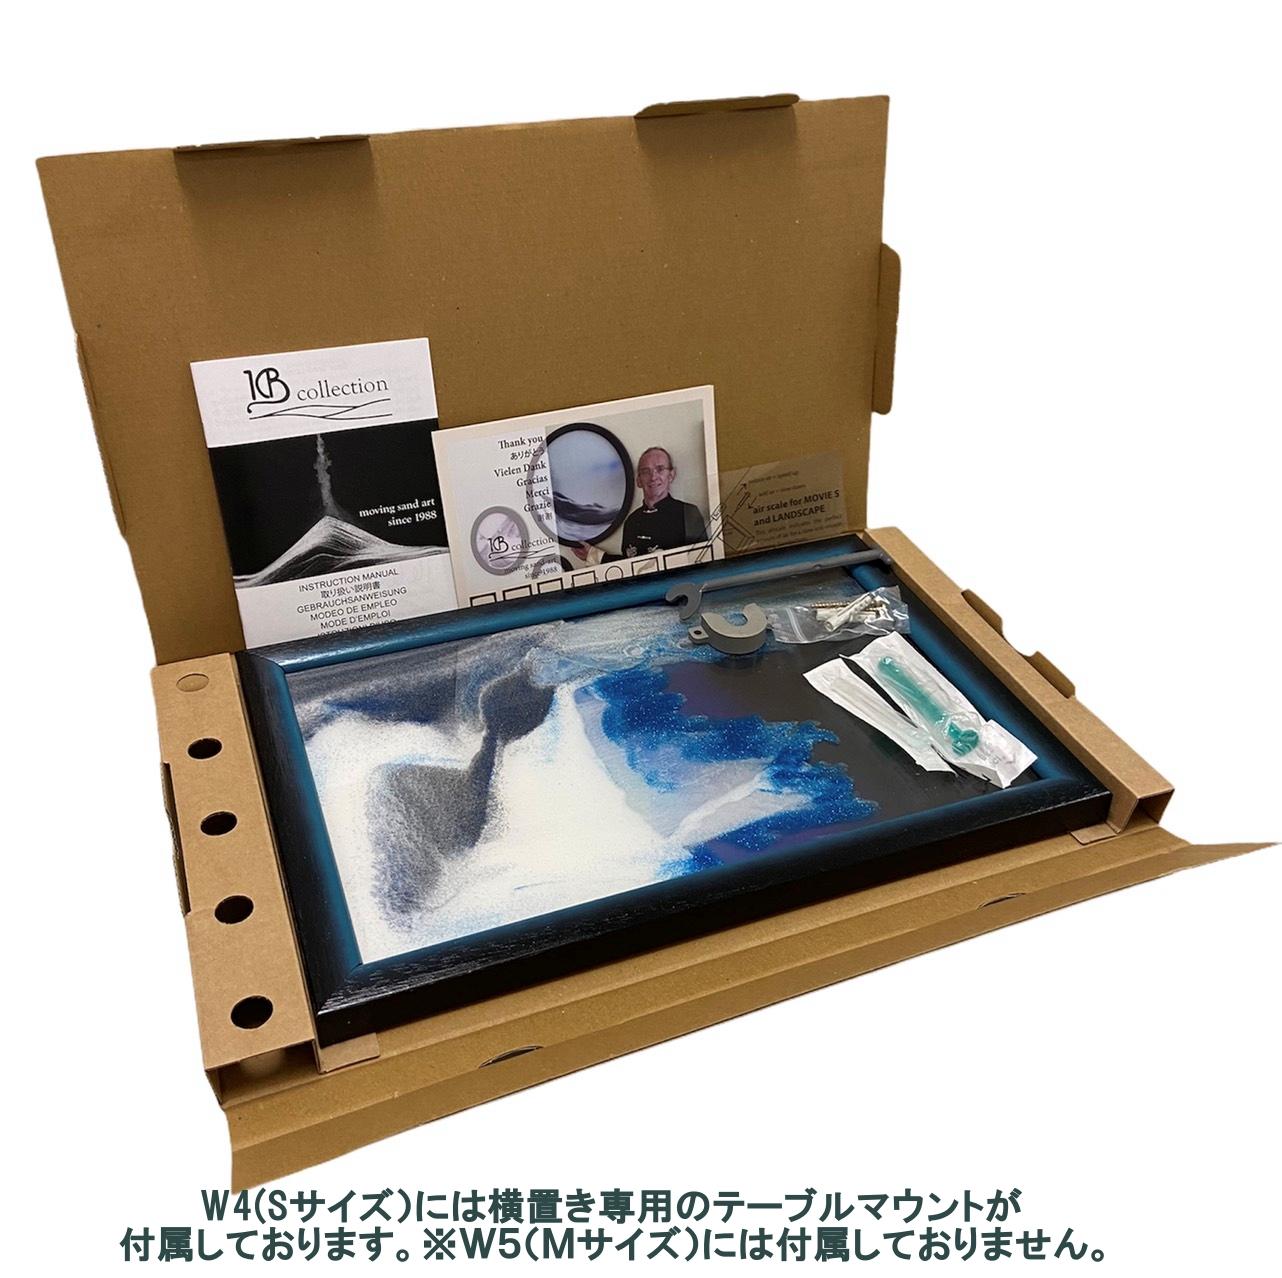 KB collection サンドピクチャーオーロラ SandPicture Gallery Japan -の商品詳細 | 蔦屋書店オンラインストア